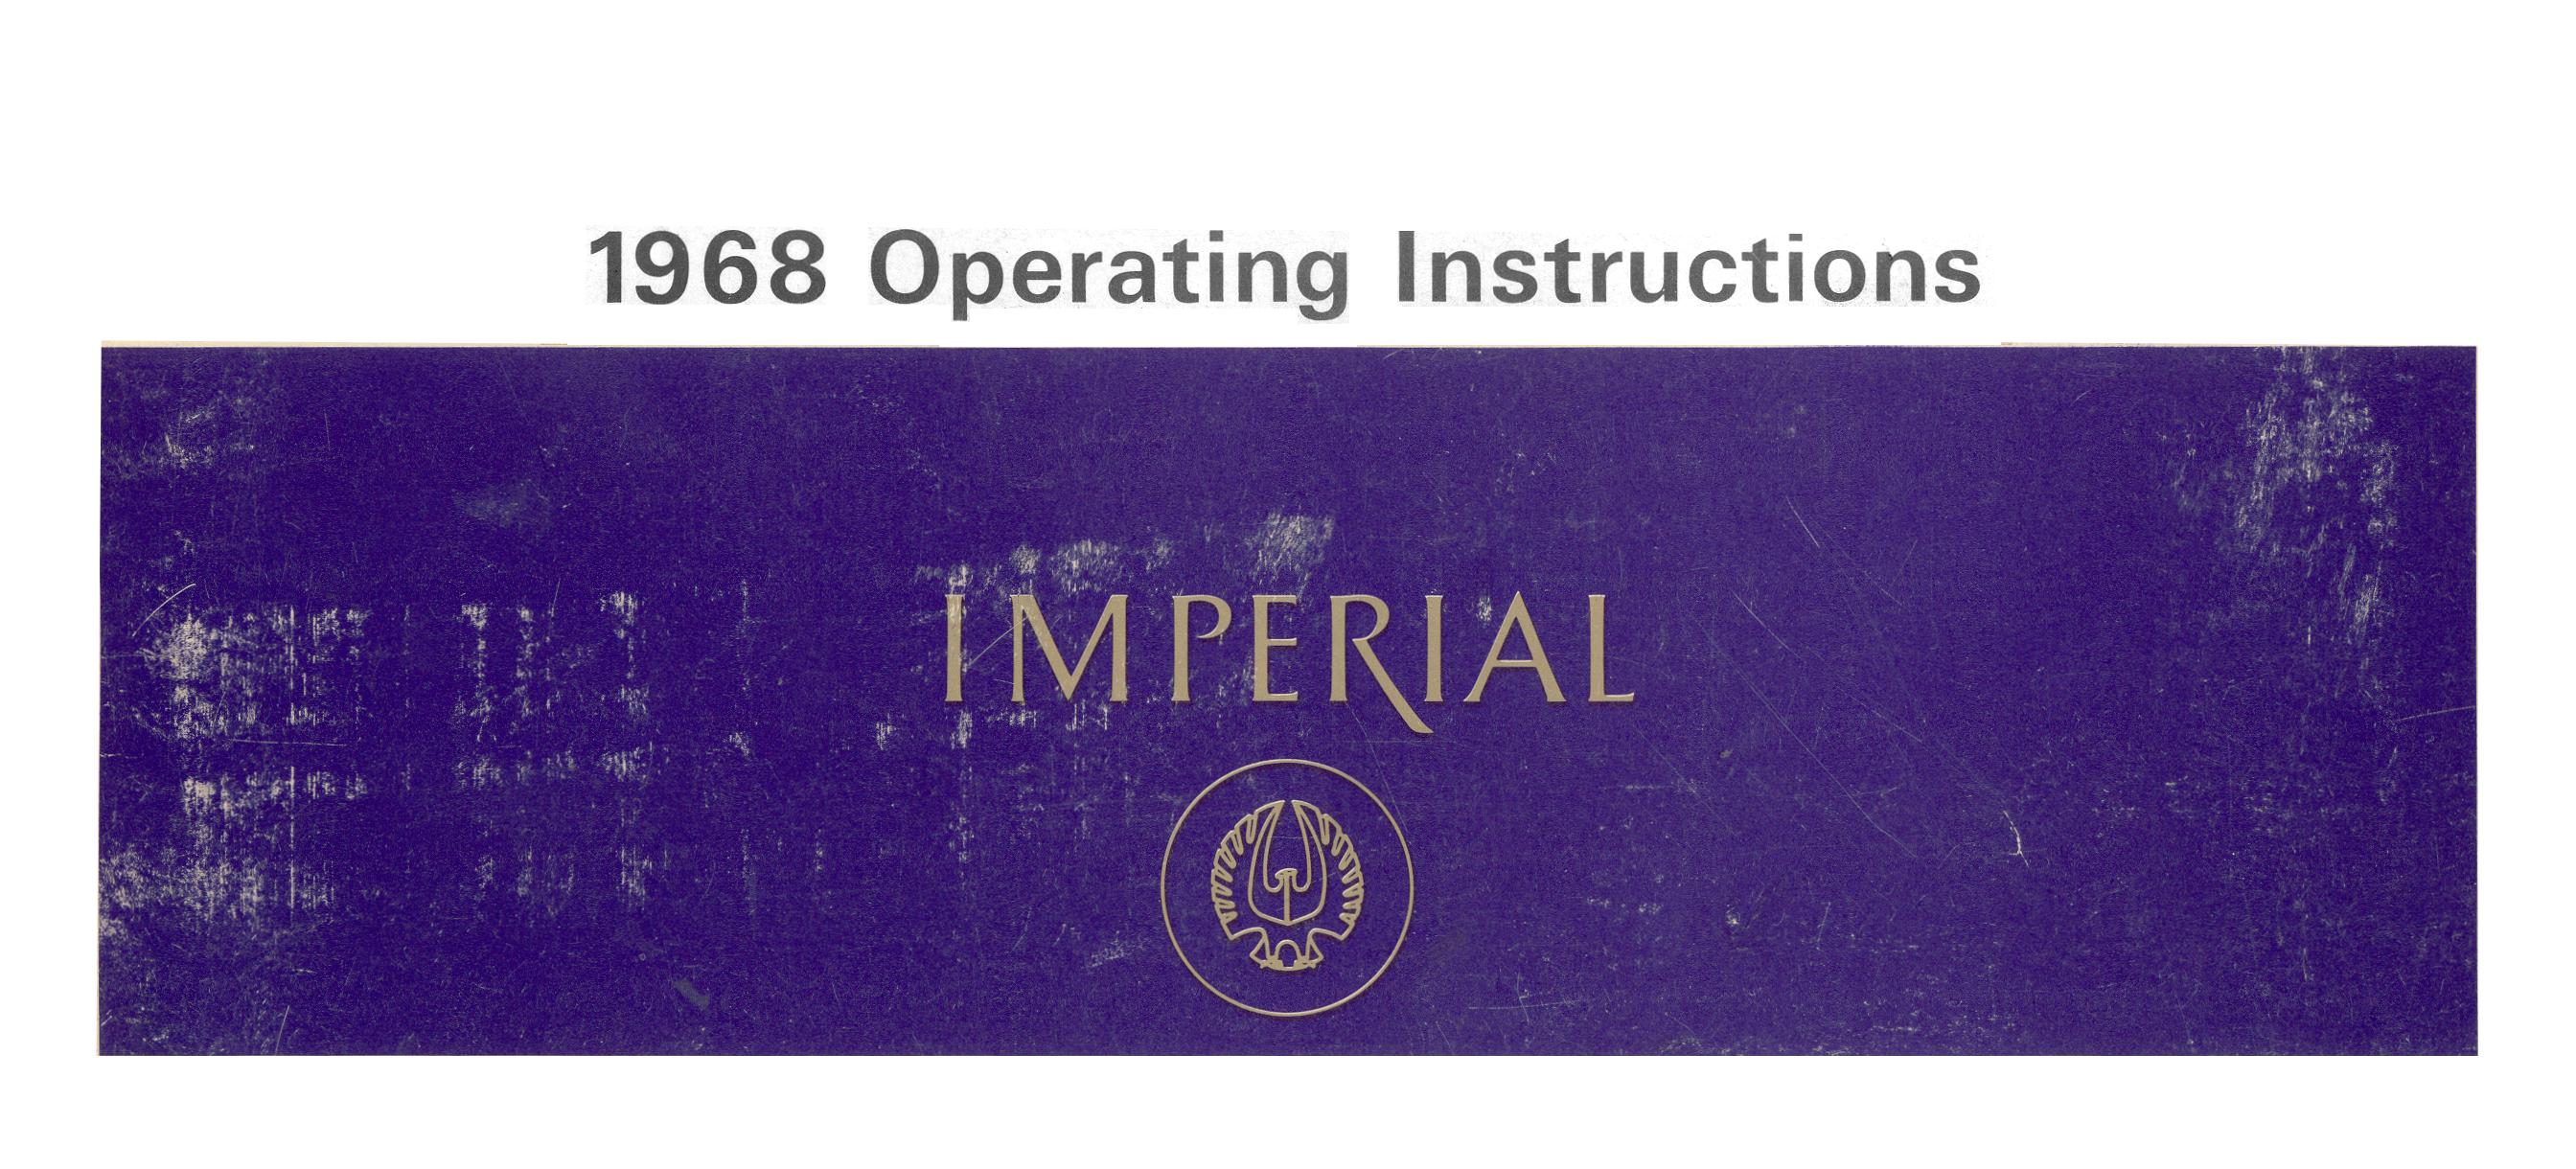 1968 Chrysler Imperial Operating Manual